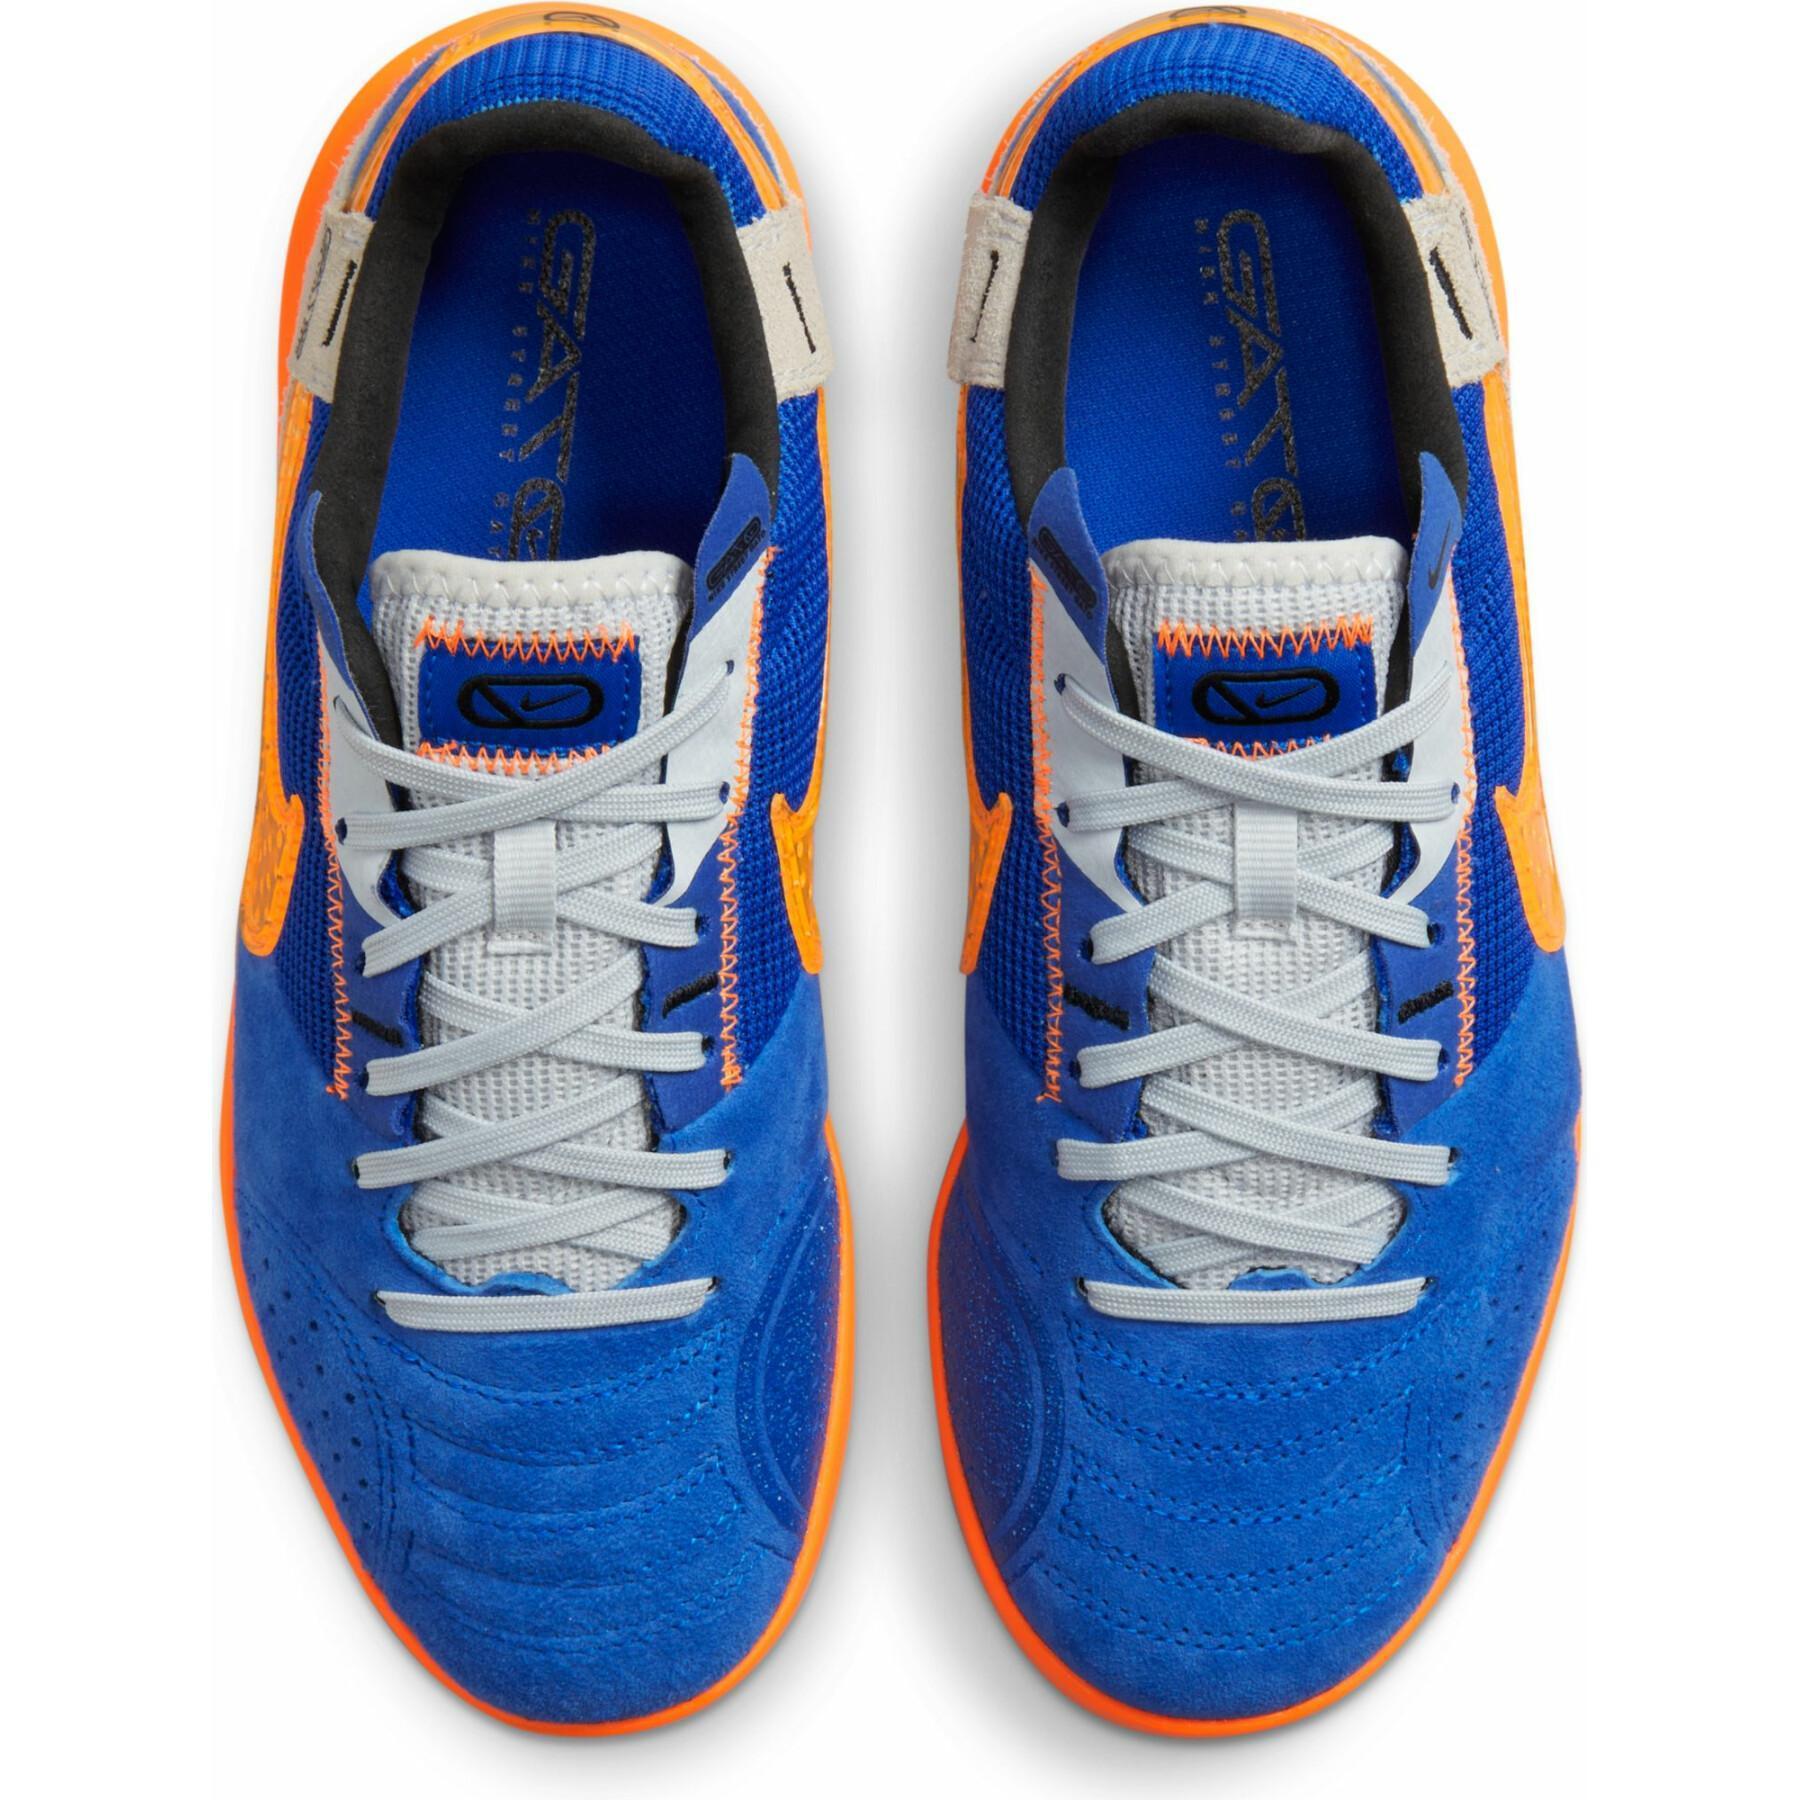 Chaussures de football enfant Nike Jr. Street Gato